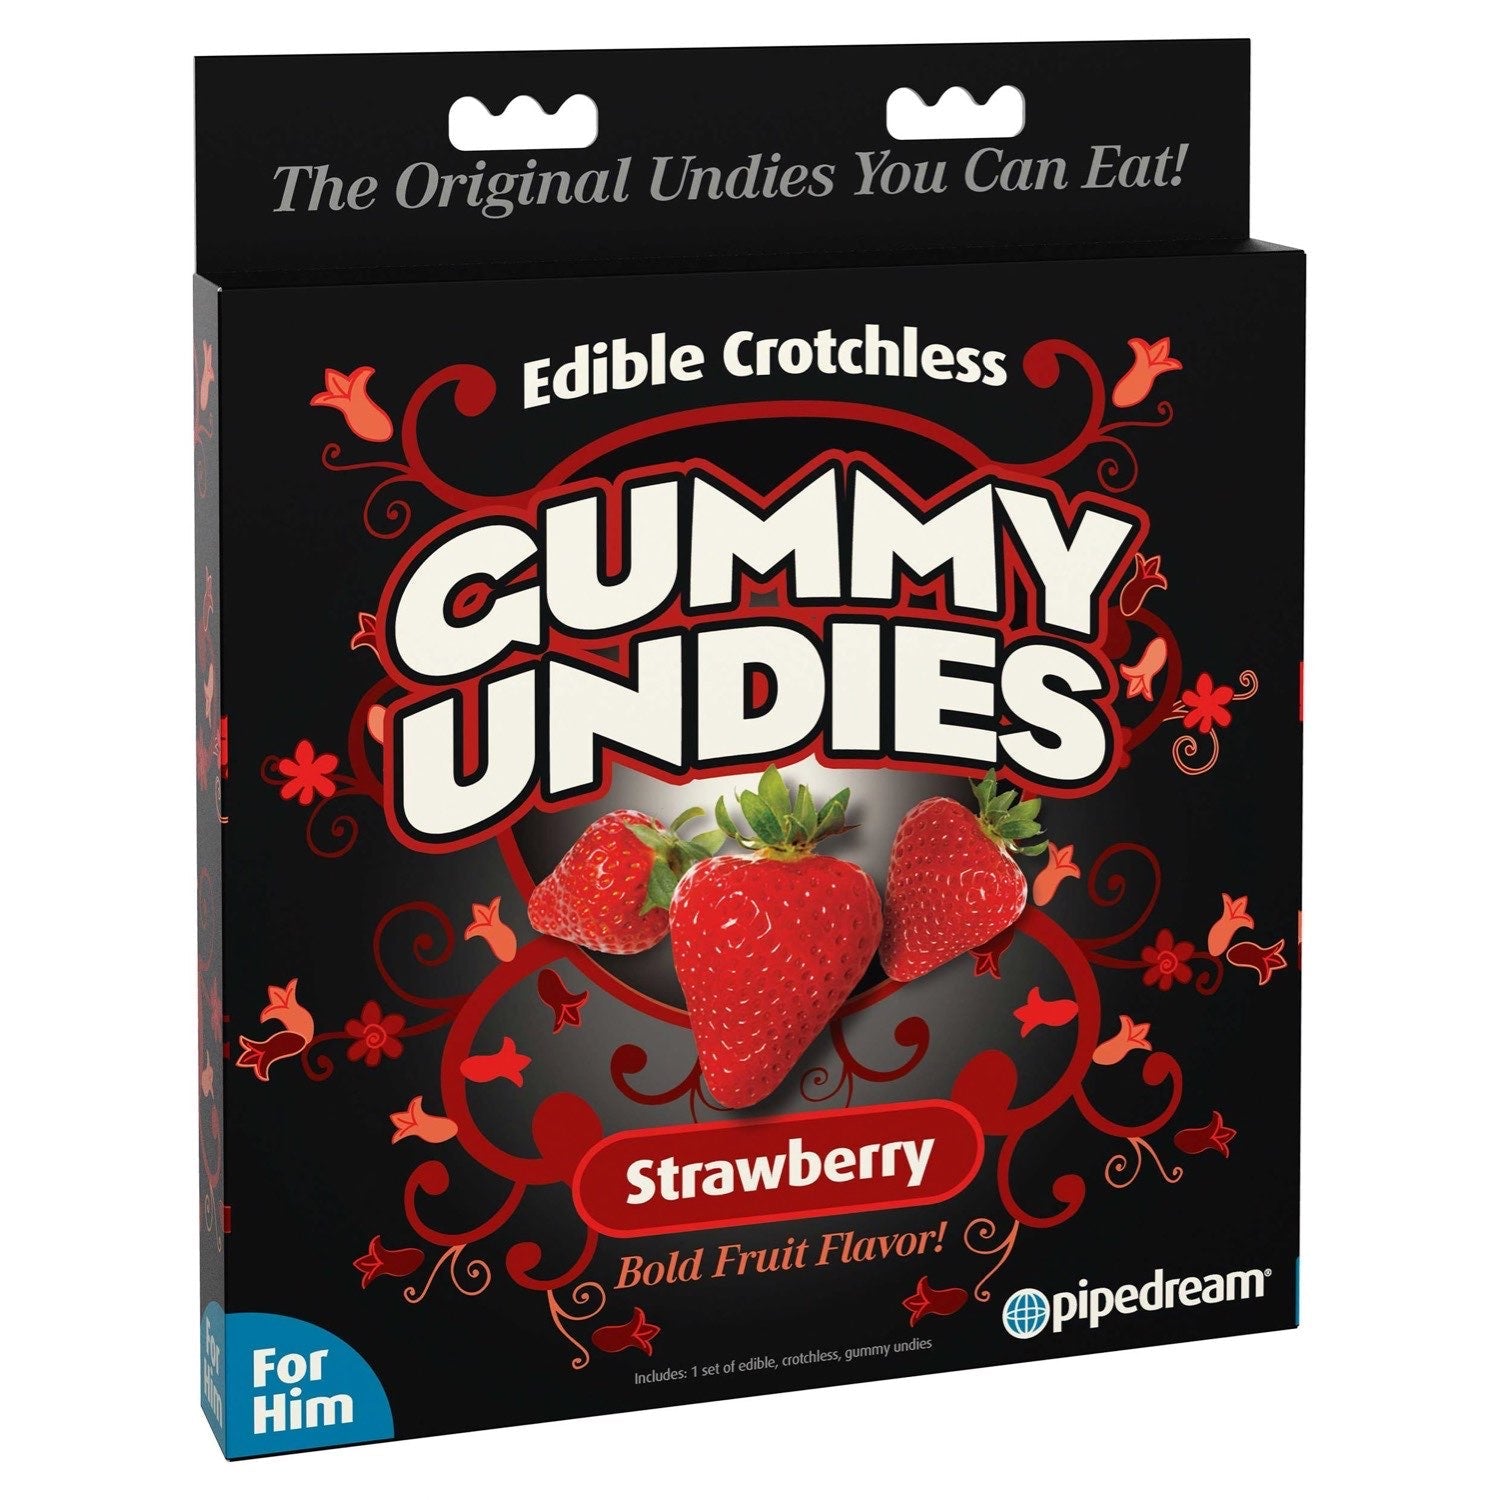  Gummy Undies - Strawberry Flavoured Edible Crotchless Undies by Pipedream